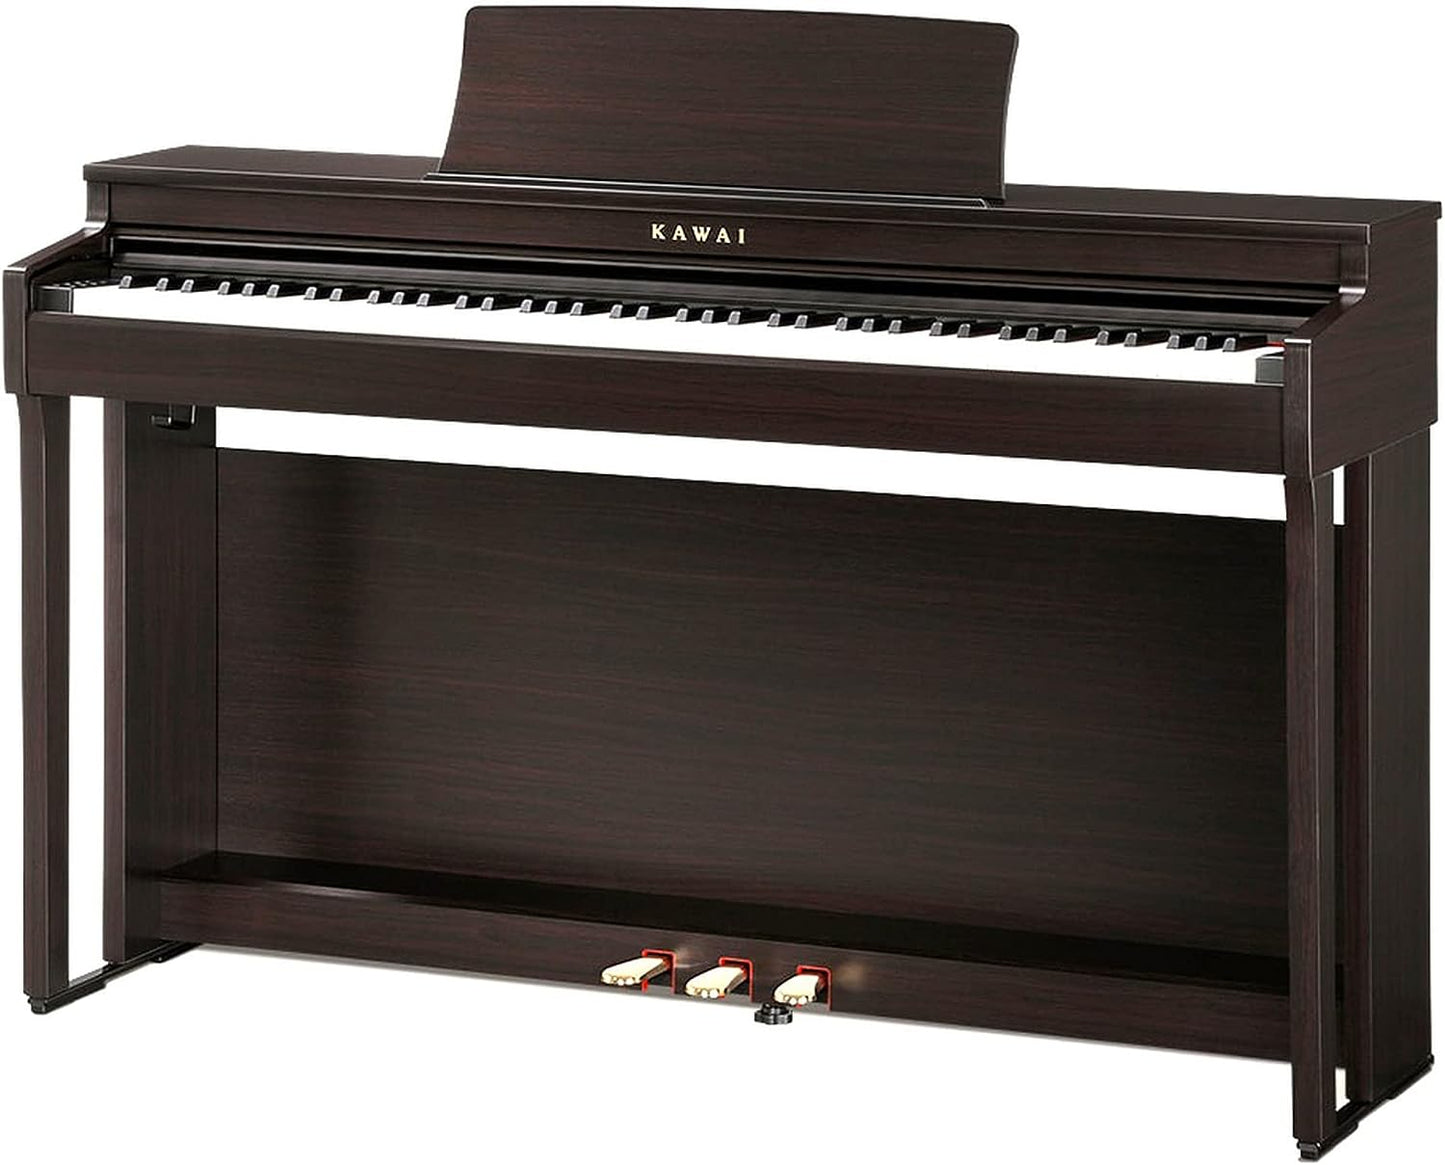 Kawai CN201 88-Key Digital Piano with Bench, Rosewood